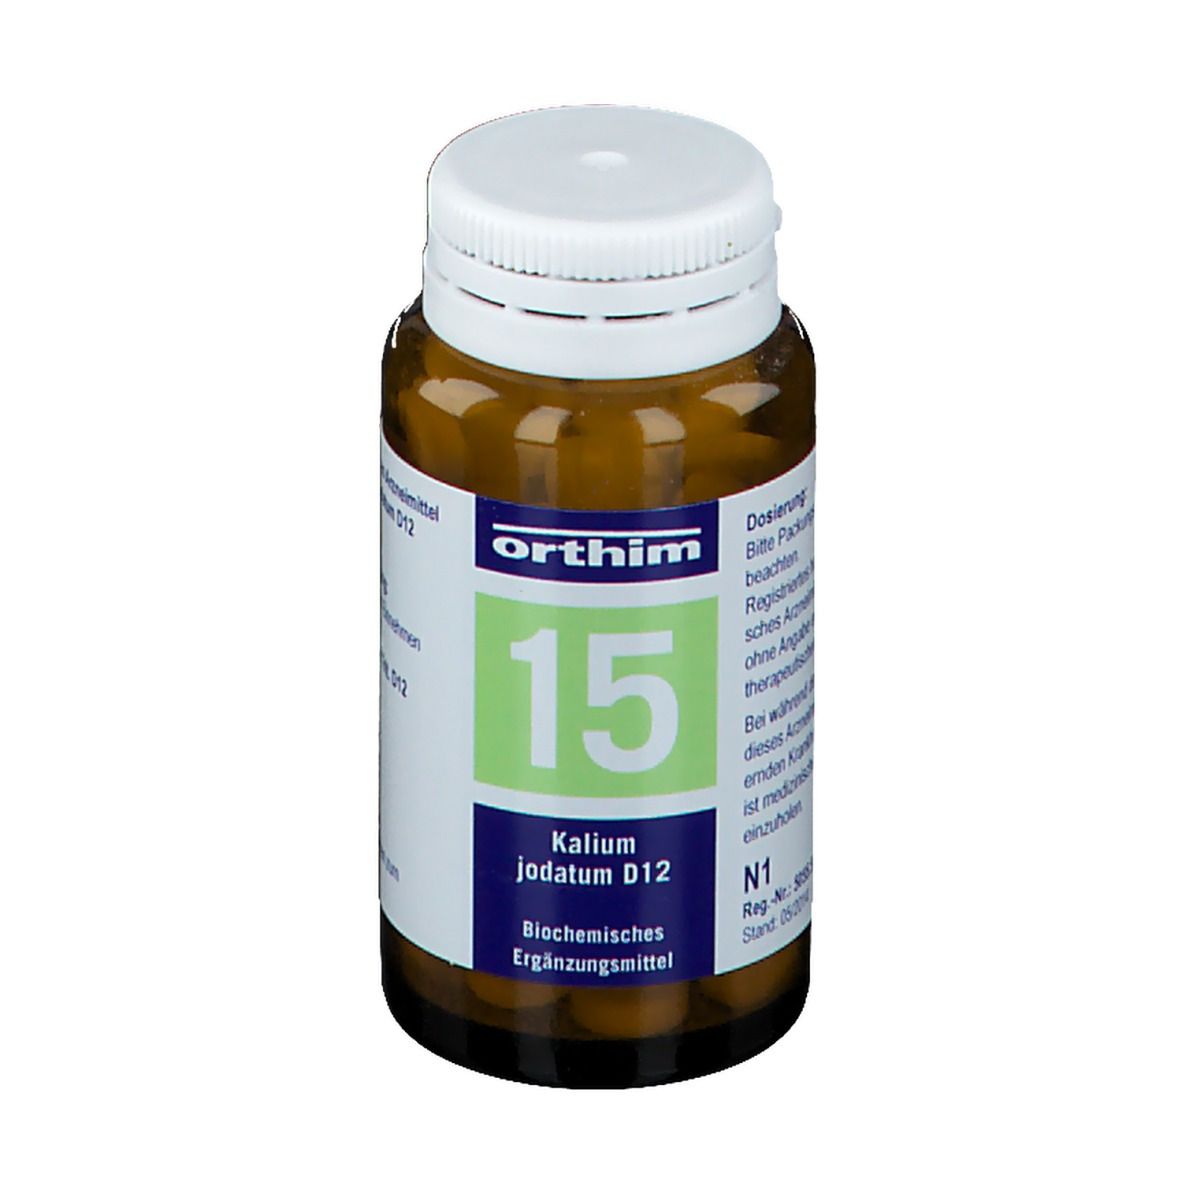 Biochemie orthim® Nr. 15 Kalium jodatum D12